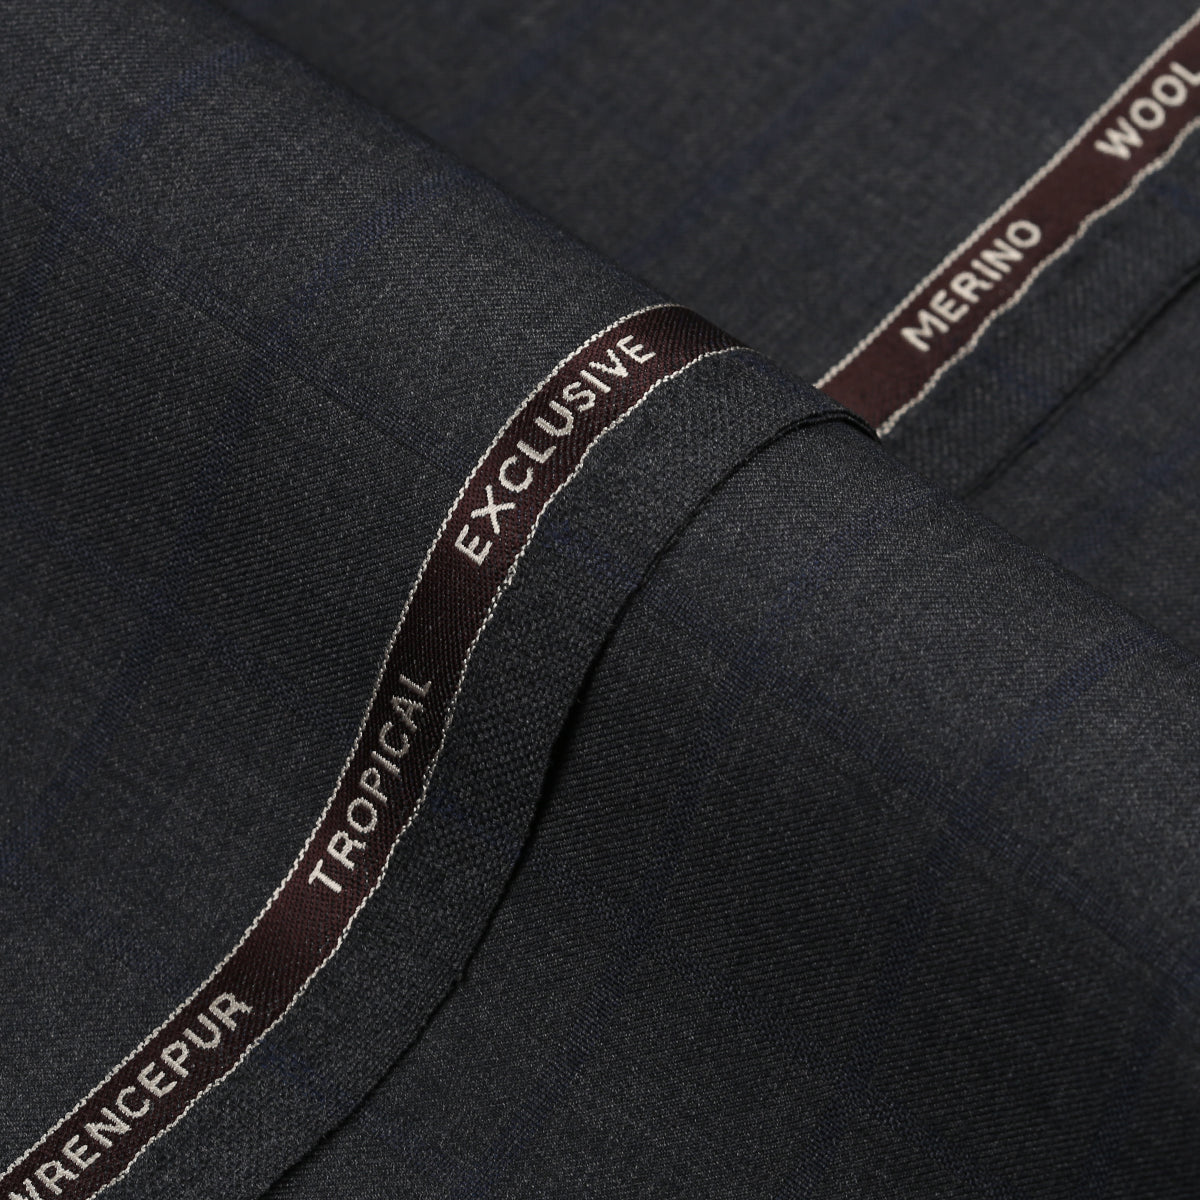 Windowpane Checks-Medium Grey, Wool Blend, Tropical Exclusive Suiting Fabric